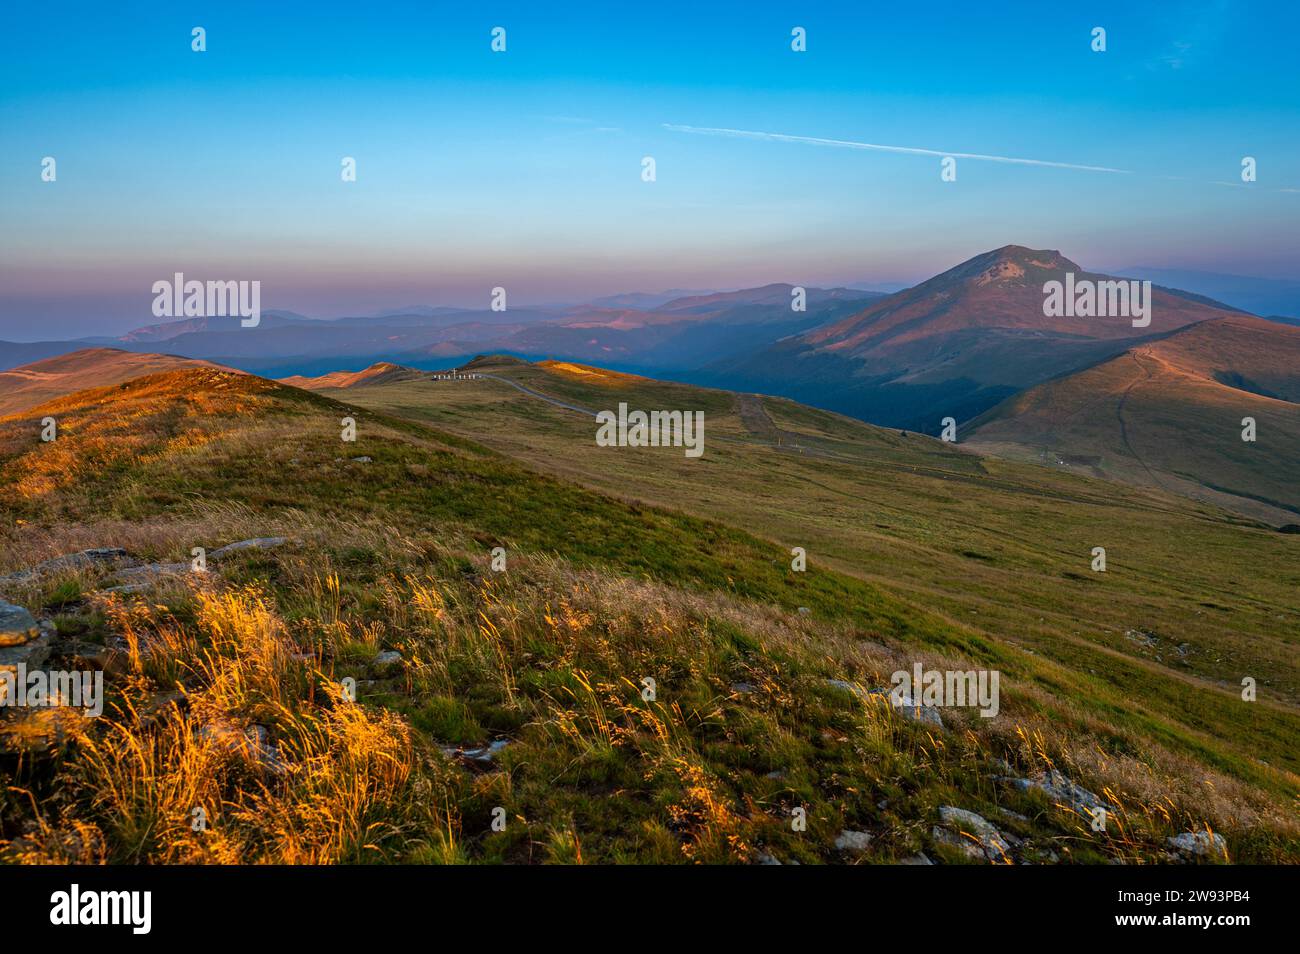 Southern Carpathians mountain landscape. Mt. Straja, Valcan Mountains, Romania. Stock Photo